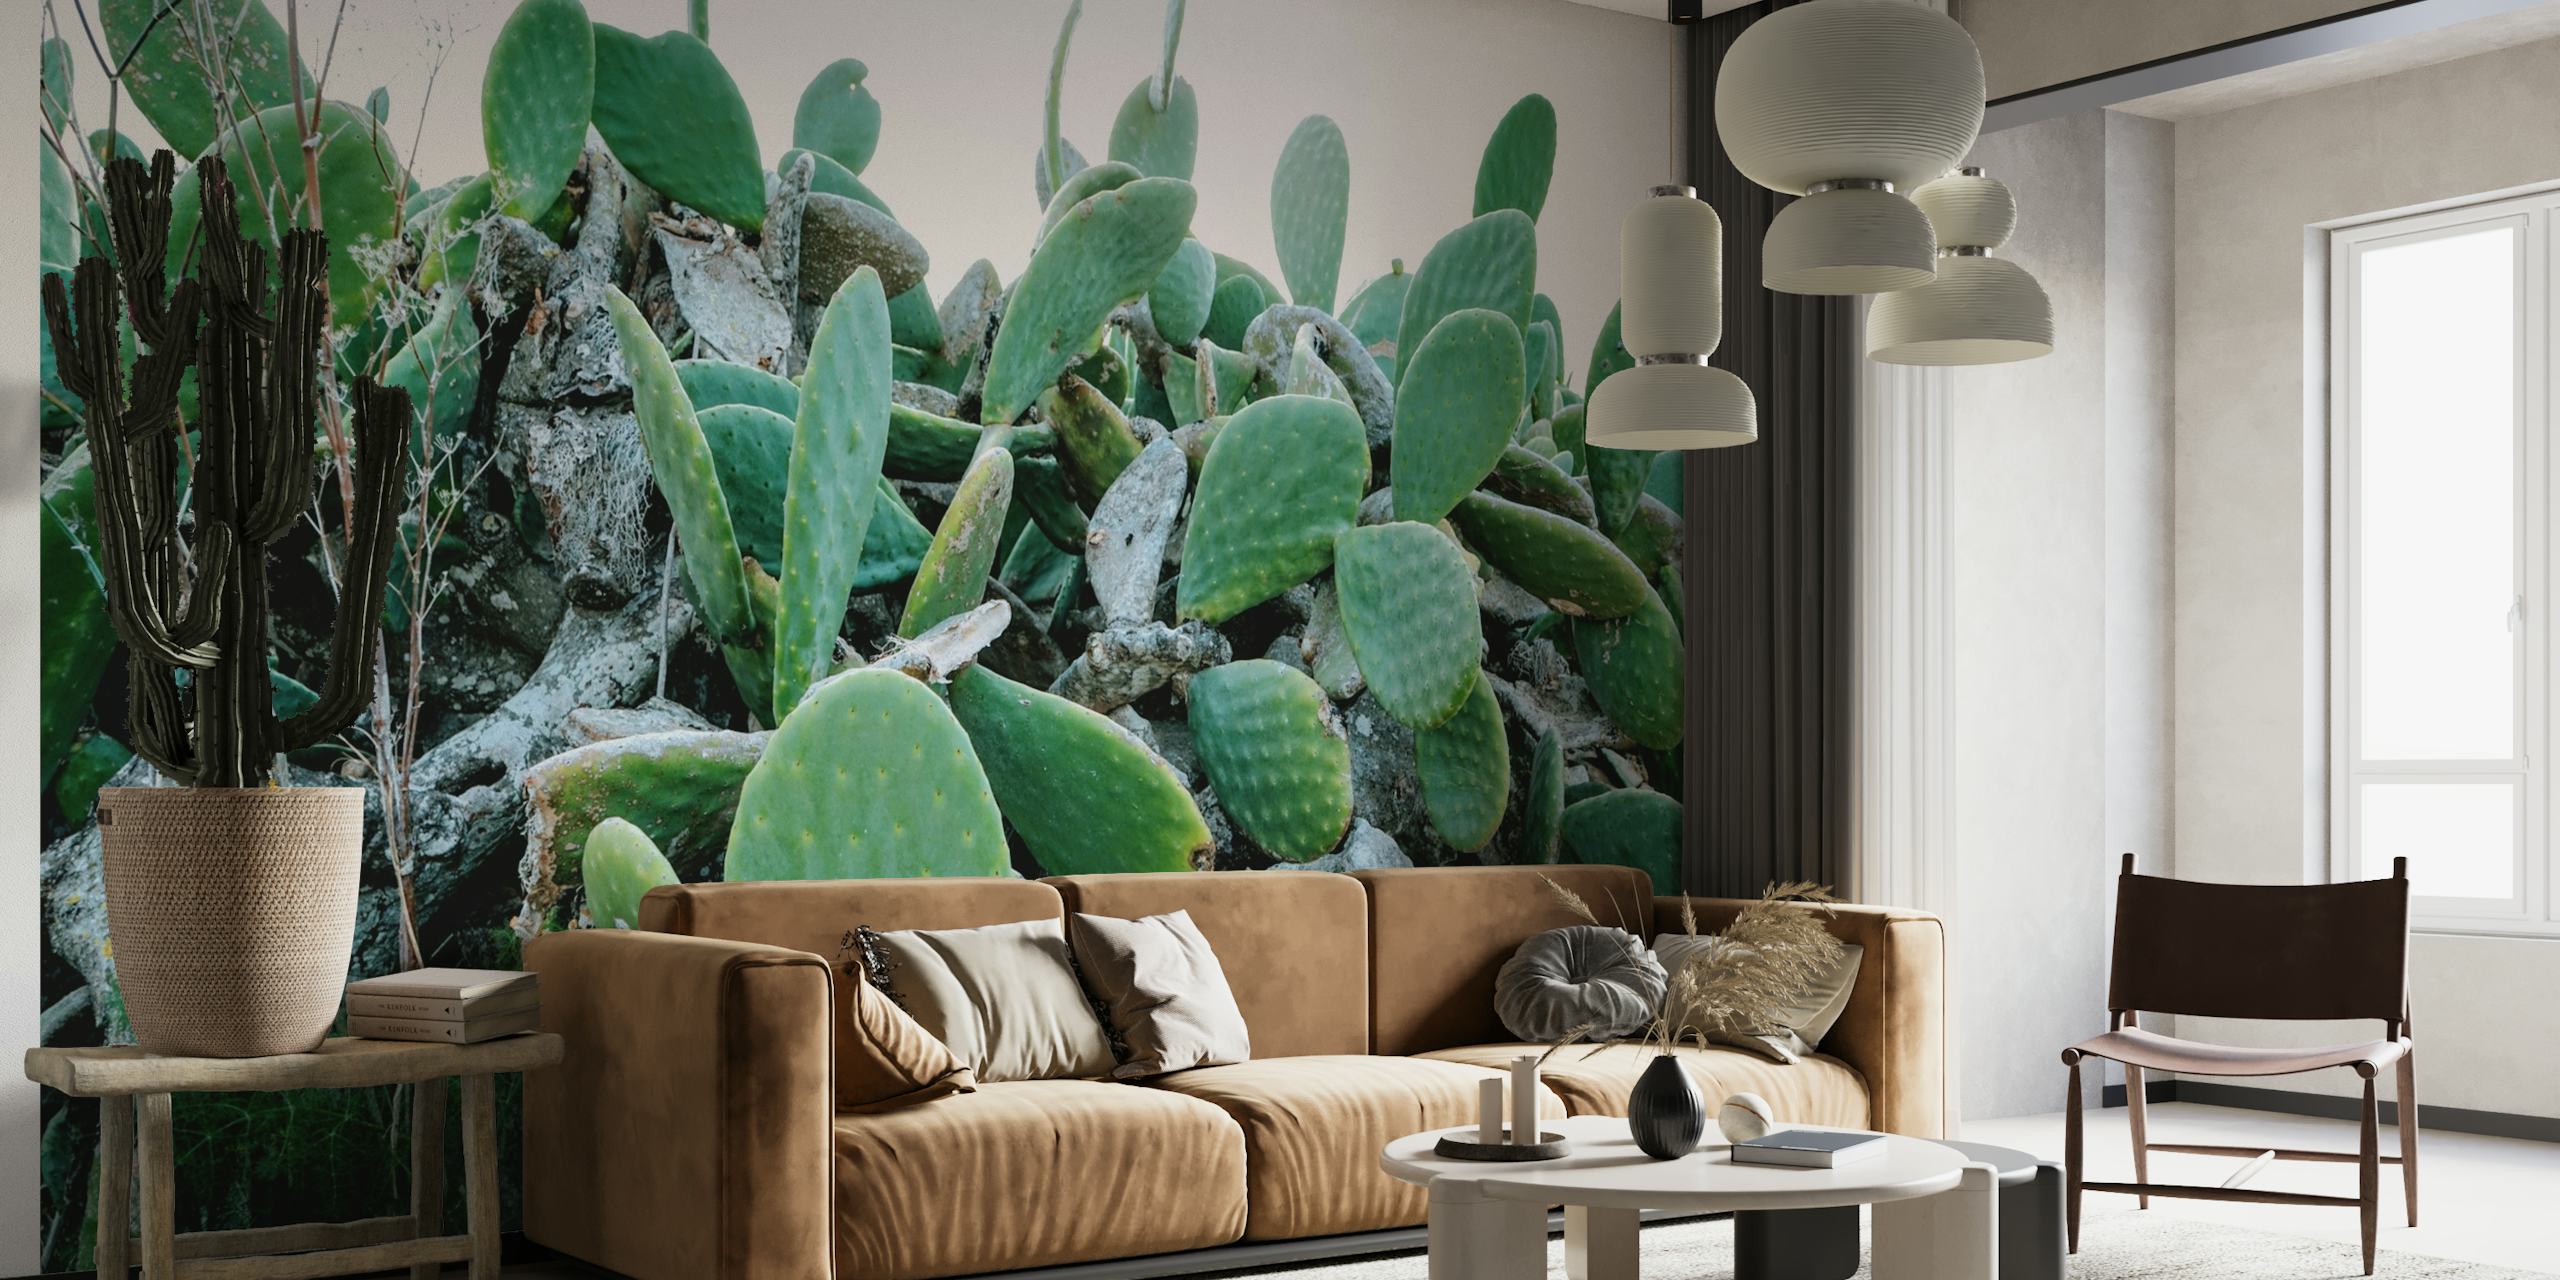 Cactus Gardens vægmaleri med levende klynge kaktusser